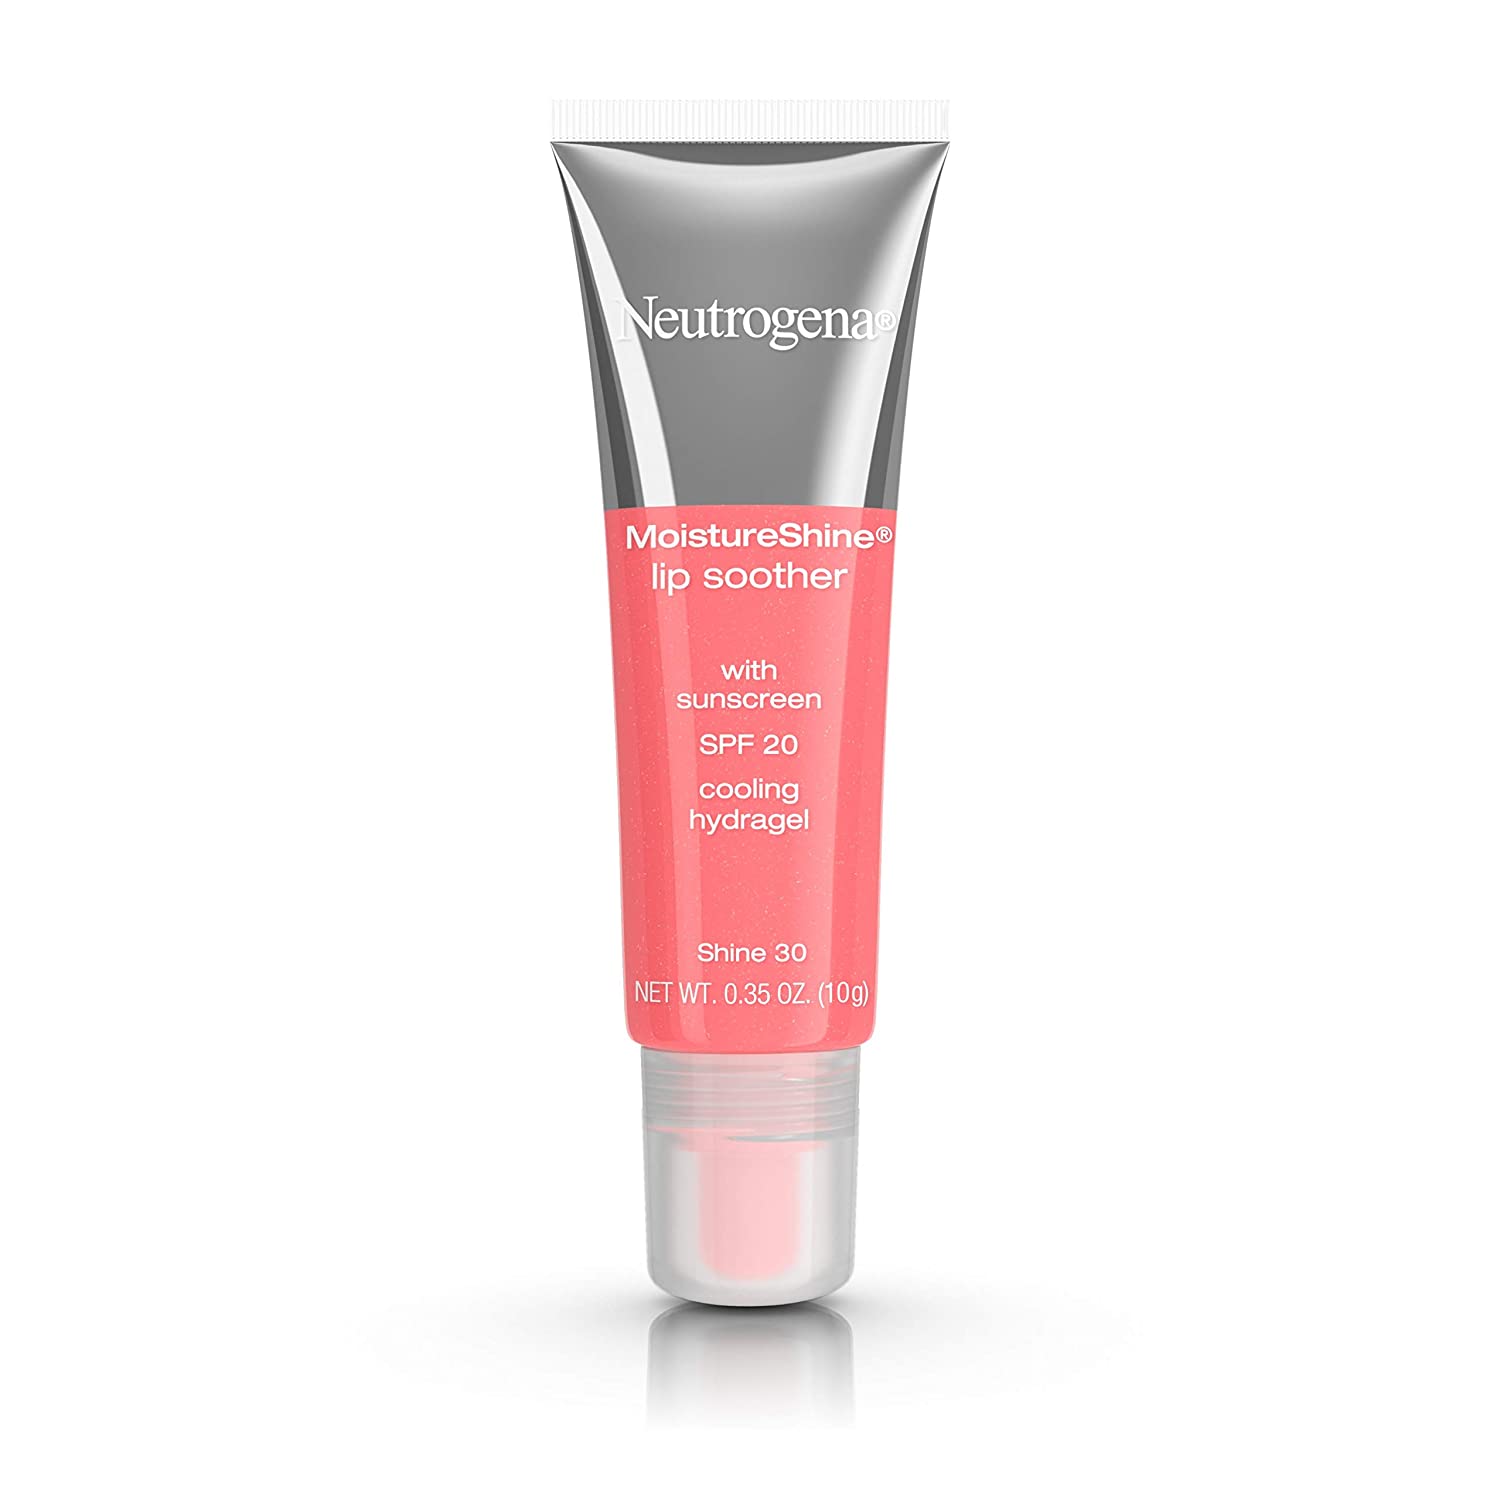 Neutrogena MoistureShine Lip Soother Gloss with SPF 20 Sun Protection (Glaze 60, Shine 30) $2.80 w/ S&S + Free Shipping w/ Prime or $25+